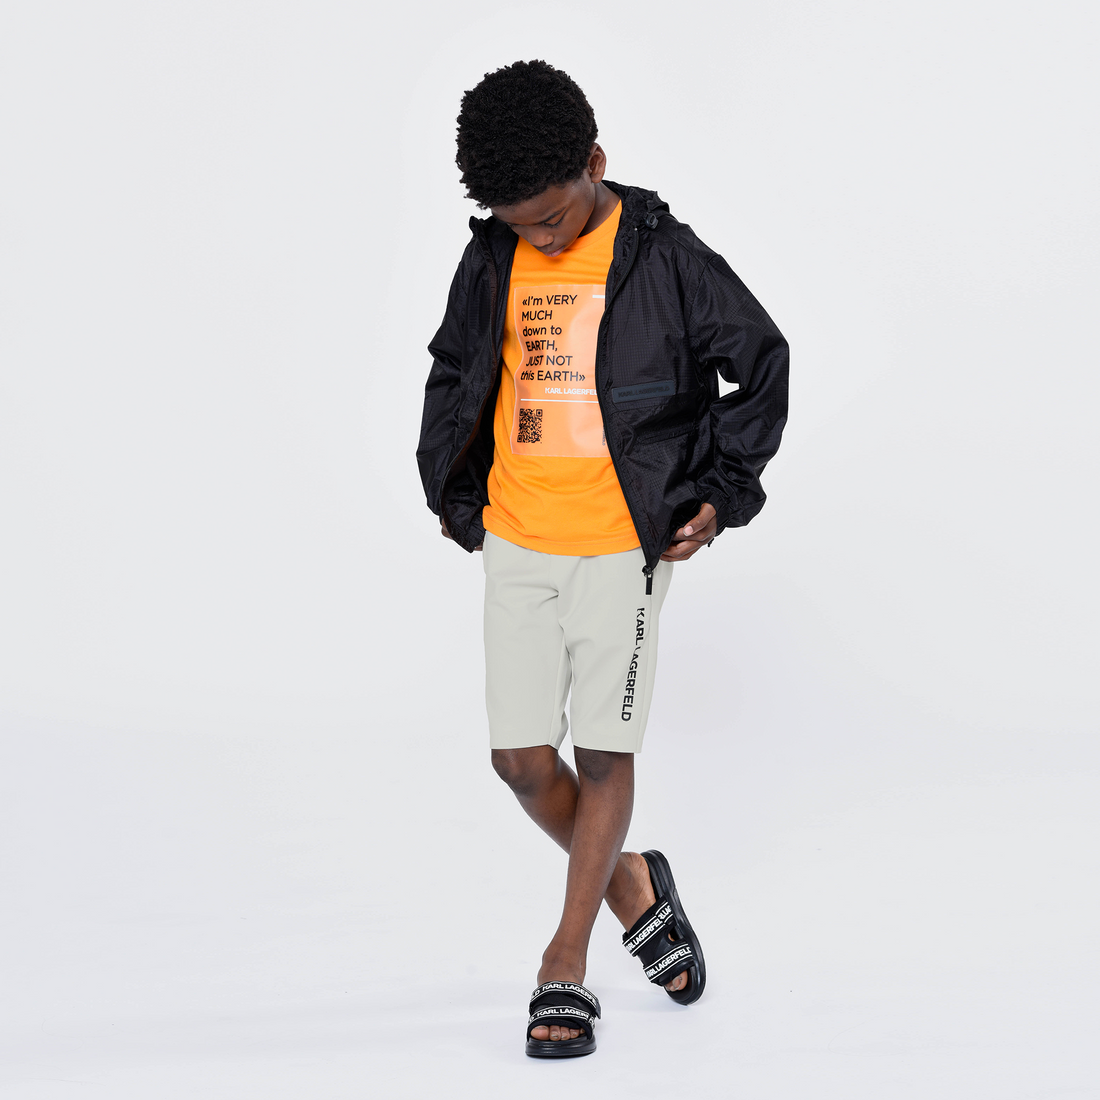 Karl Lagerfeld Kids Bermuda Shorts Style: Z24159